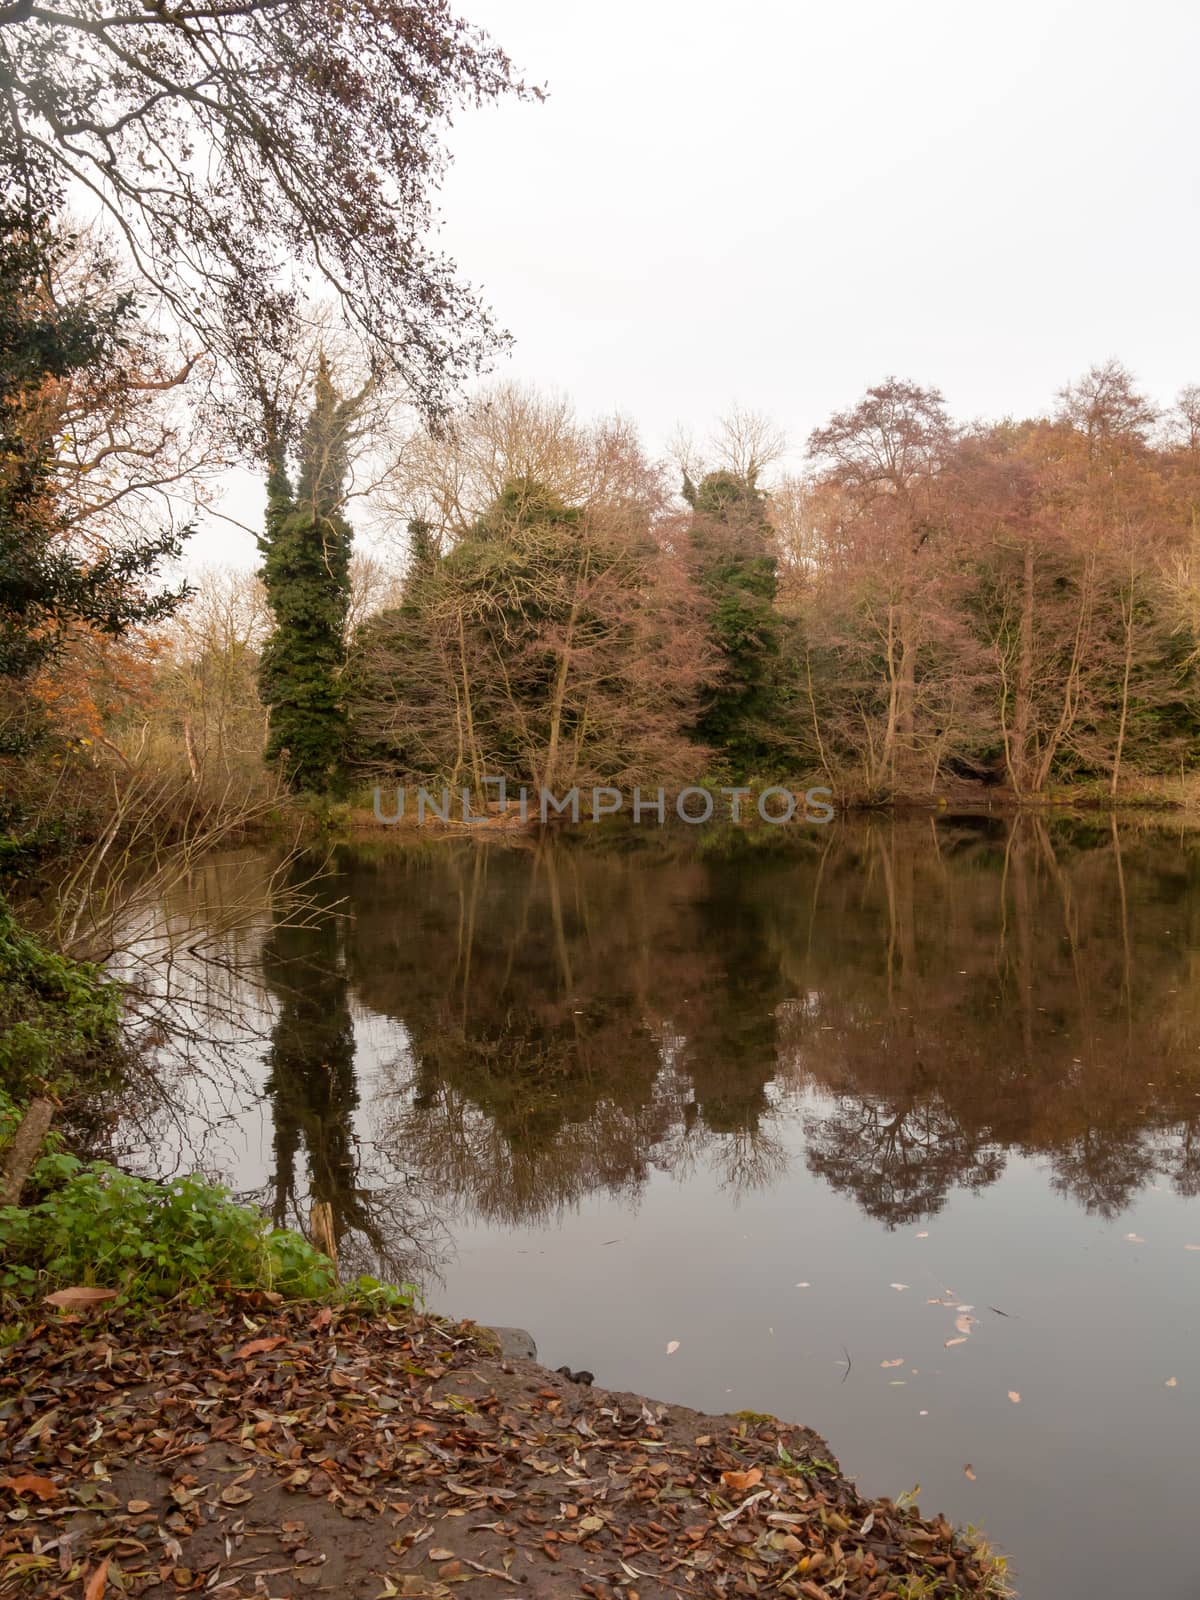 gamekeeper's pond winter autumn trees sunlight lake bare branche by callumrc